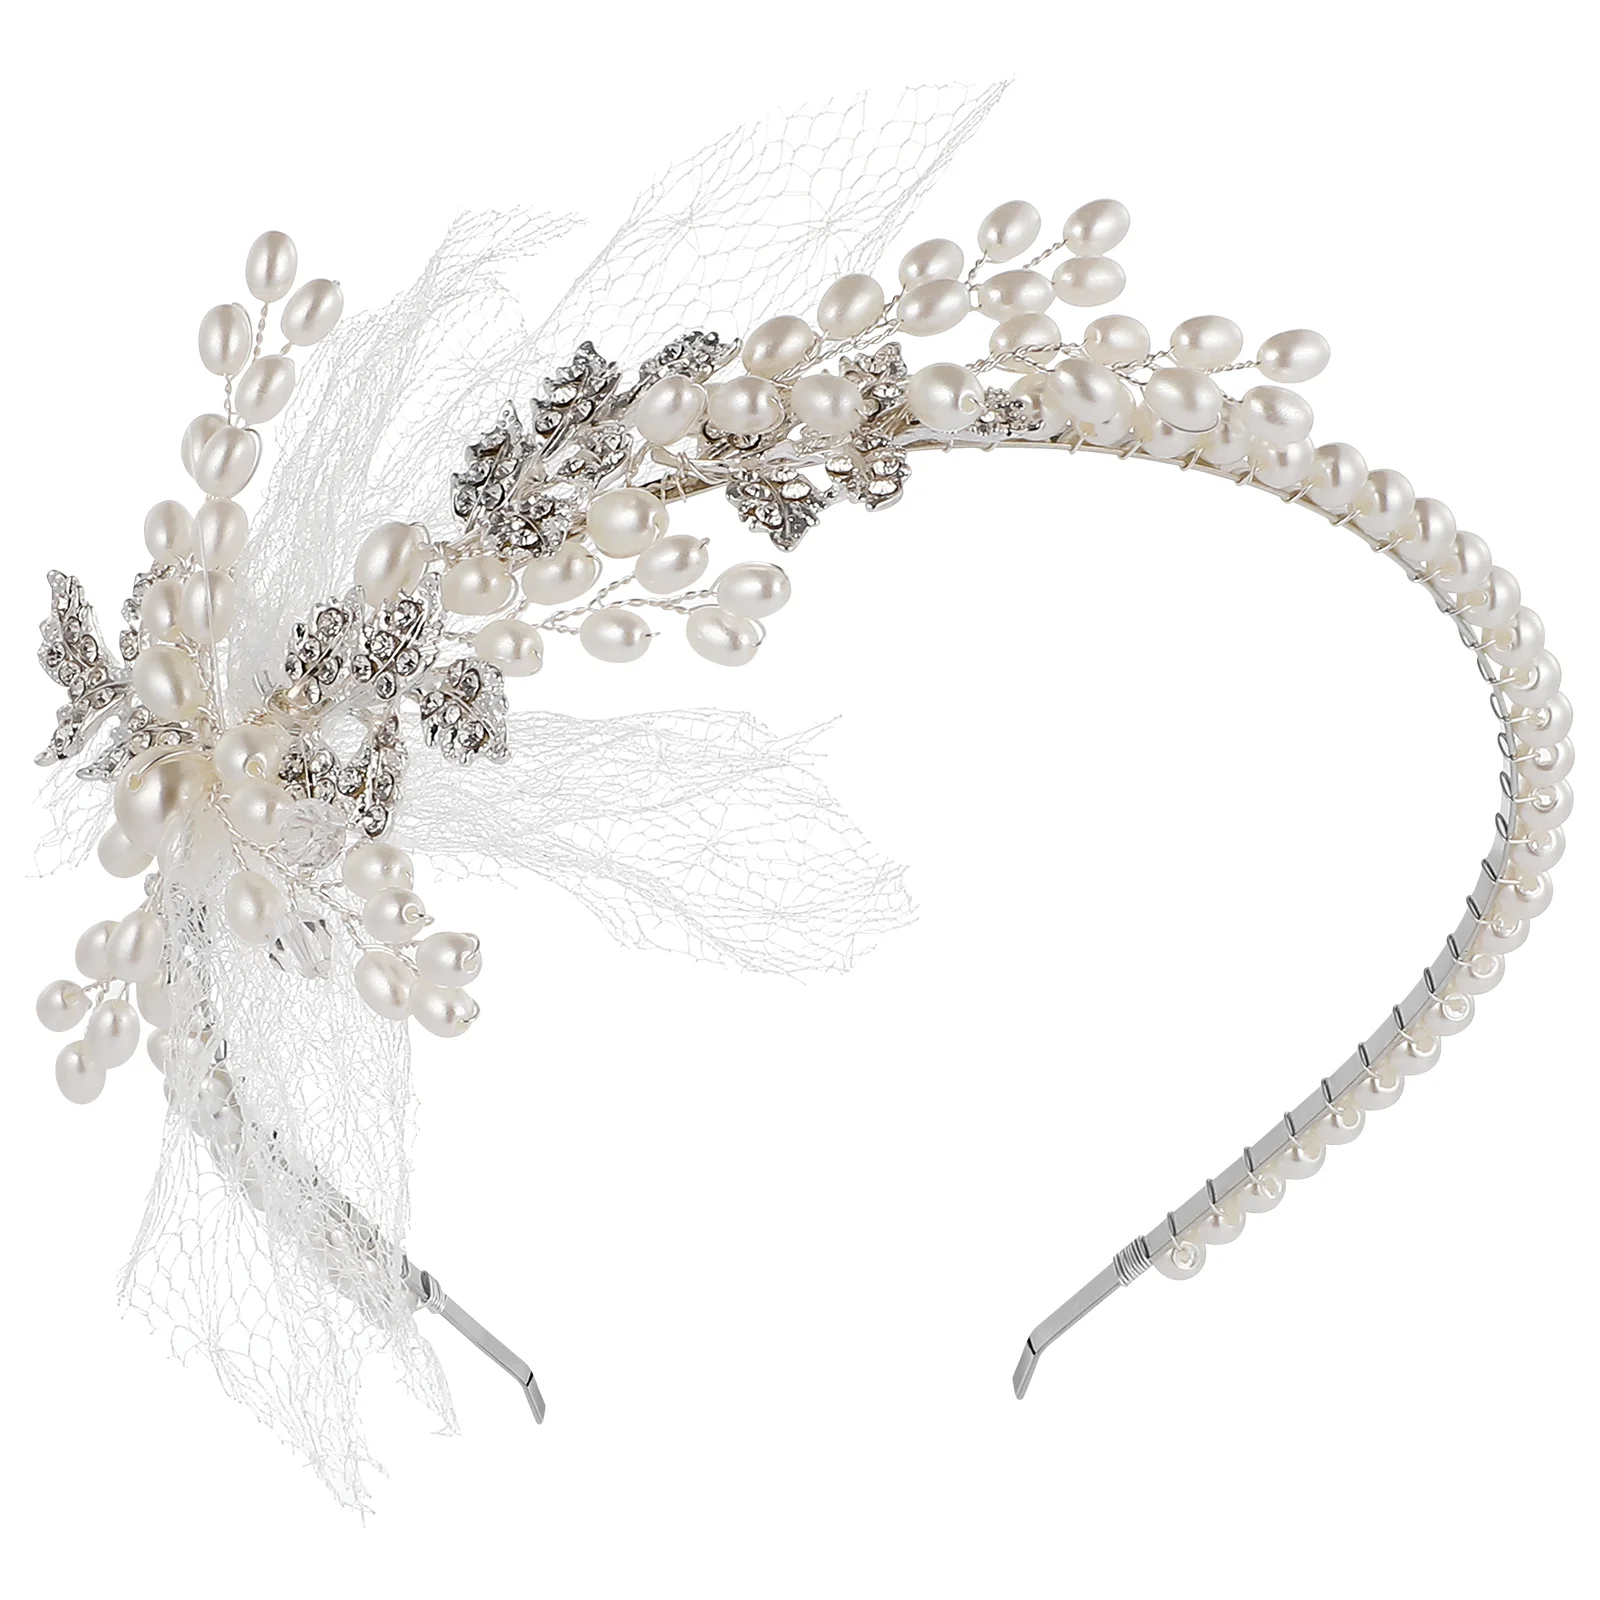 Womens Scrunchiess Headpiece Bride Silver Hair Accessories Bride Headband Brides Crystal Headpiece